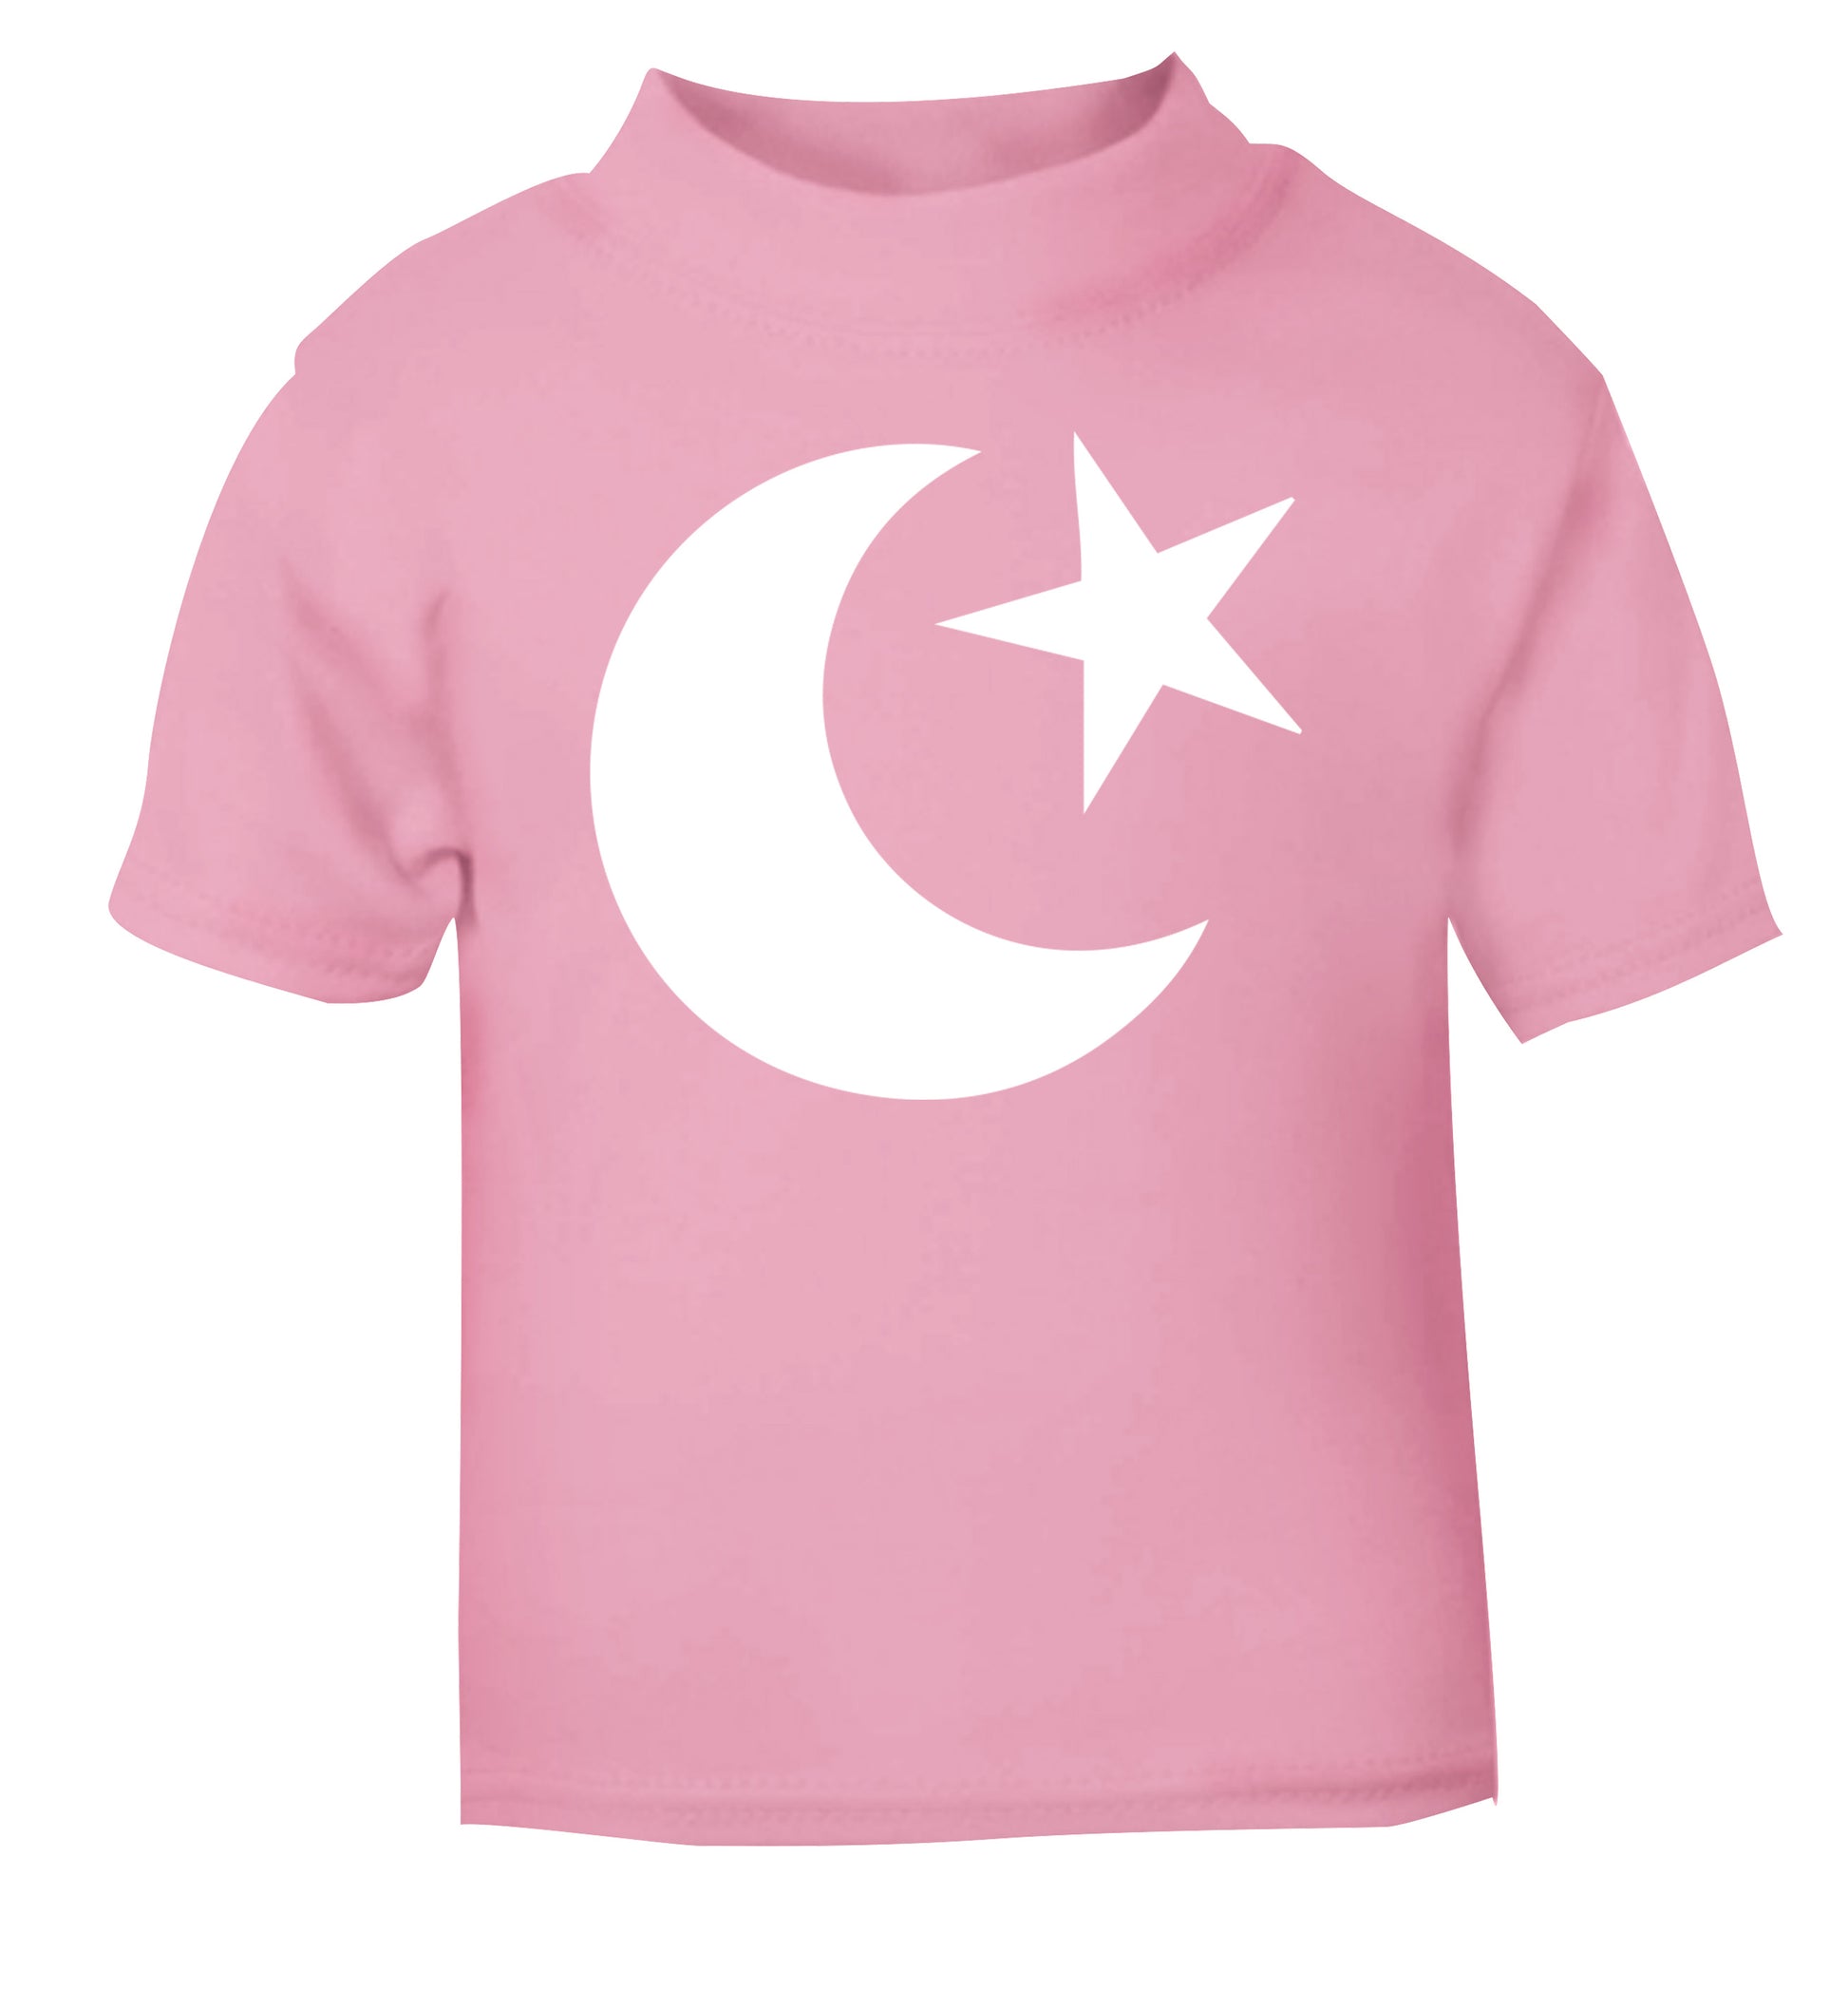 Eid symbol light pink baby toddler Tshirt 2 Years